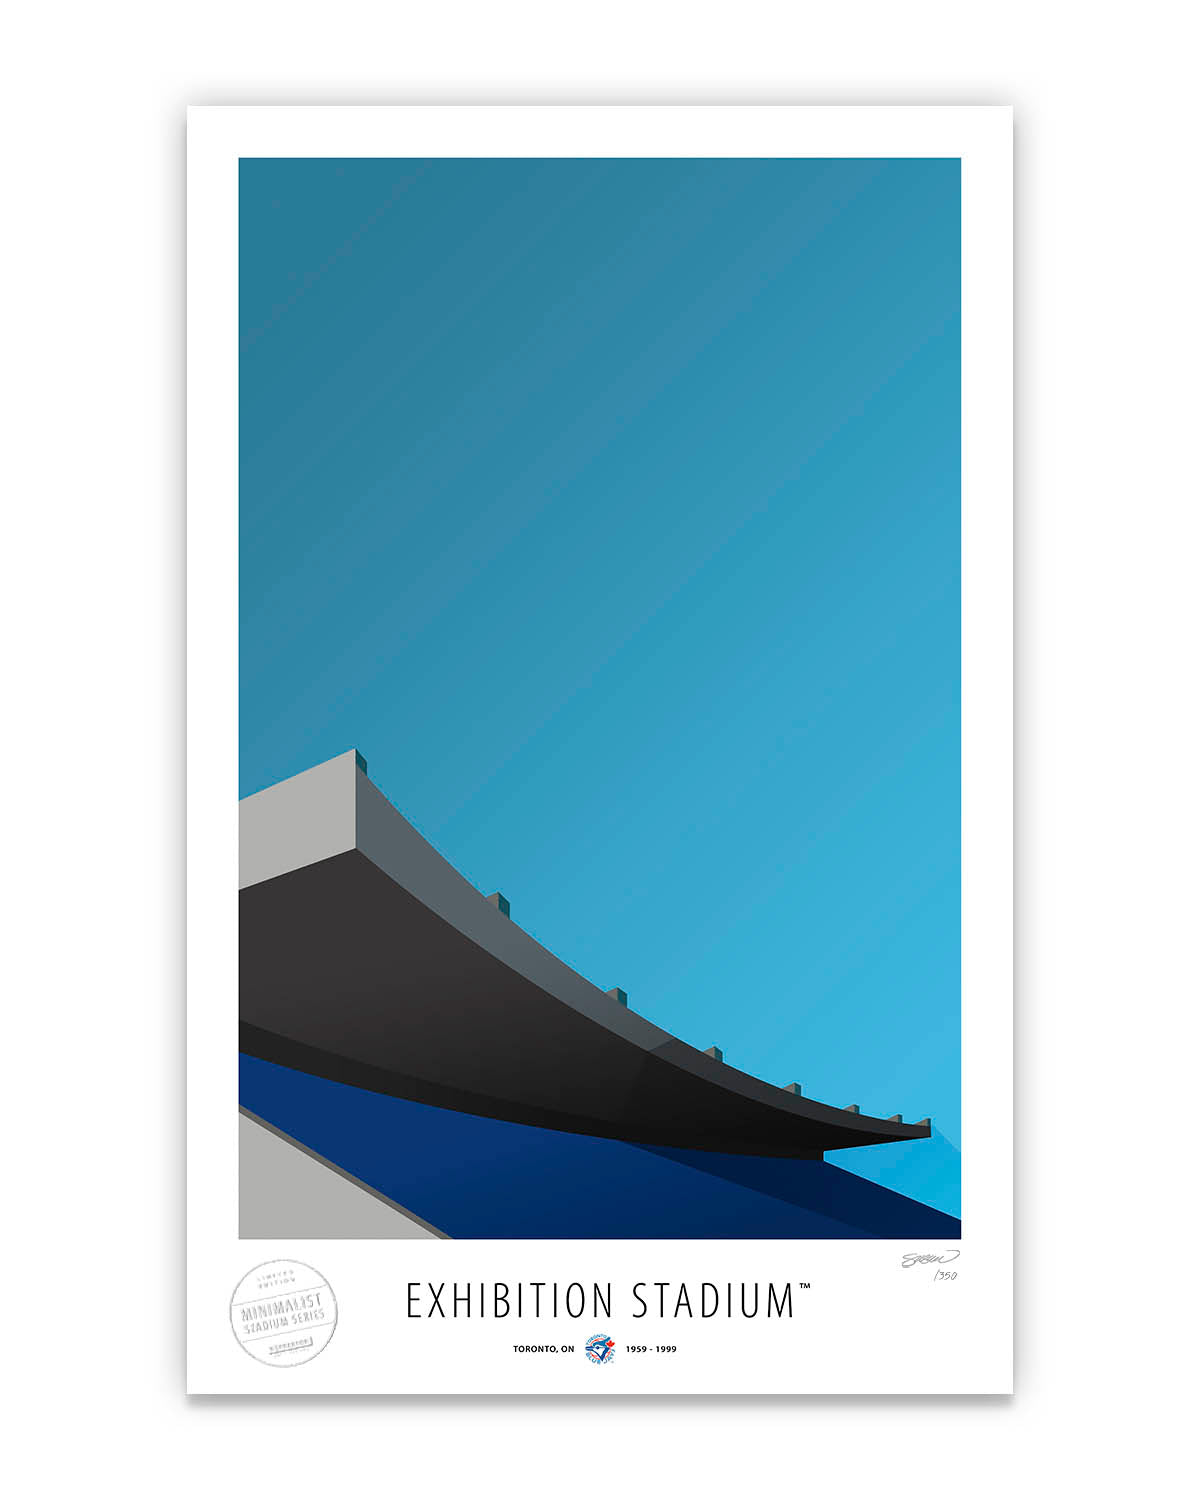 Minimalist Exhibition Stadium